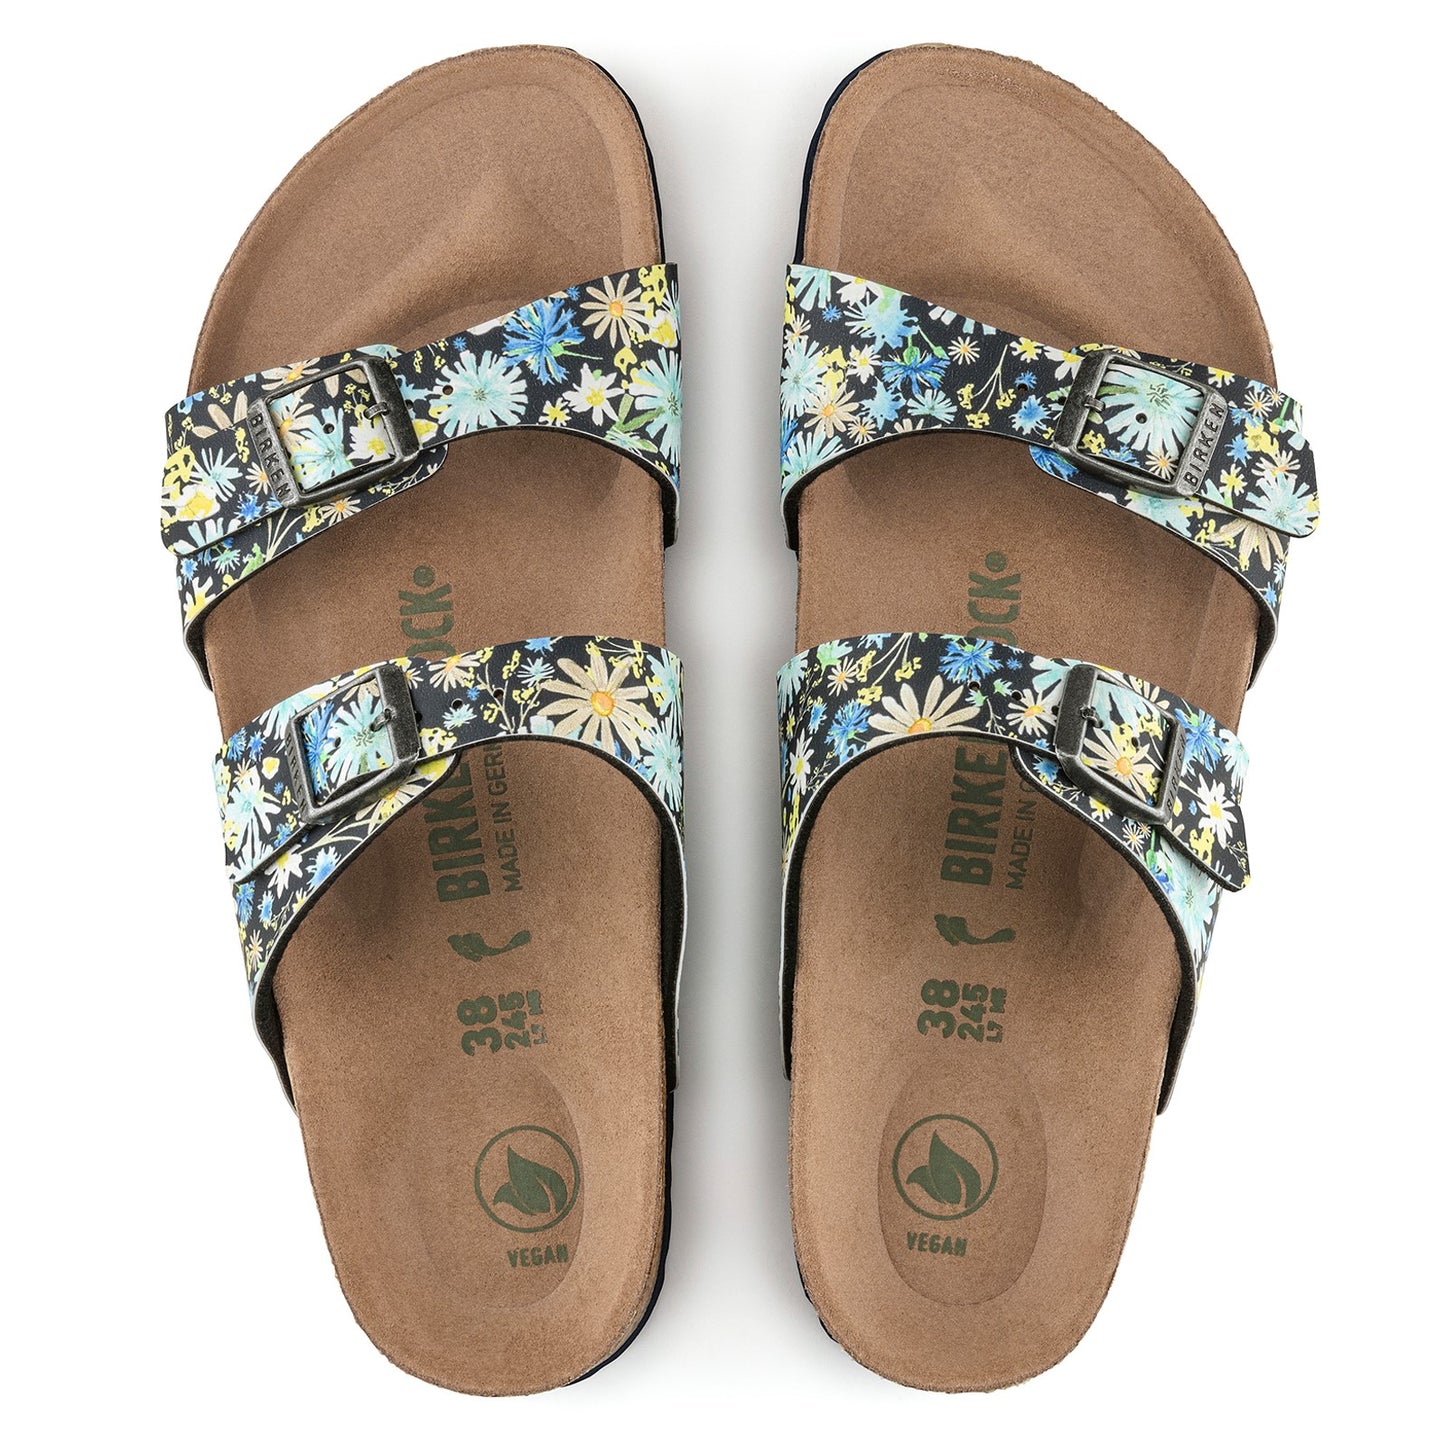 Peltz Shoes  Women's Birkenstock Sydney Birko-Flor Slide Sandal - Narrow Width BLUE FLORAL 1021 569 N